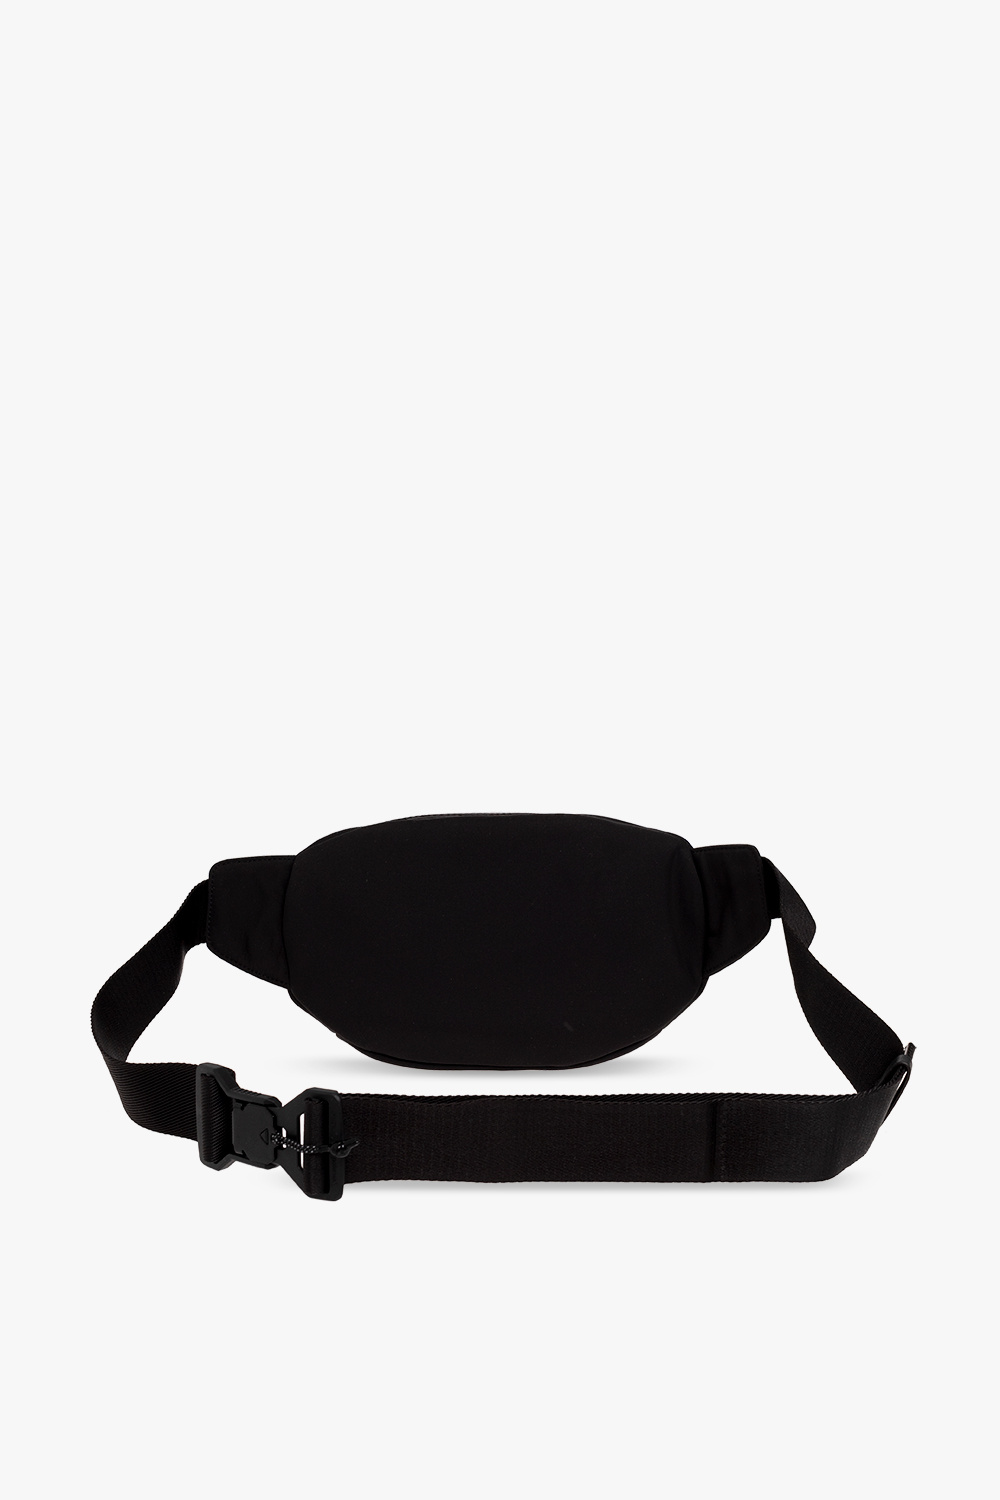 Moncler nike accessories brasilia m backpack navy